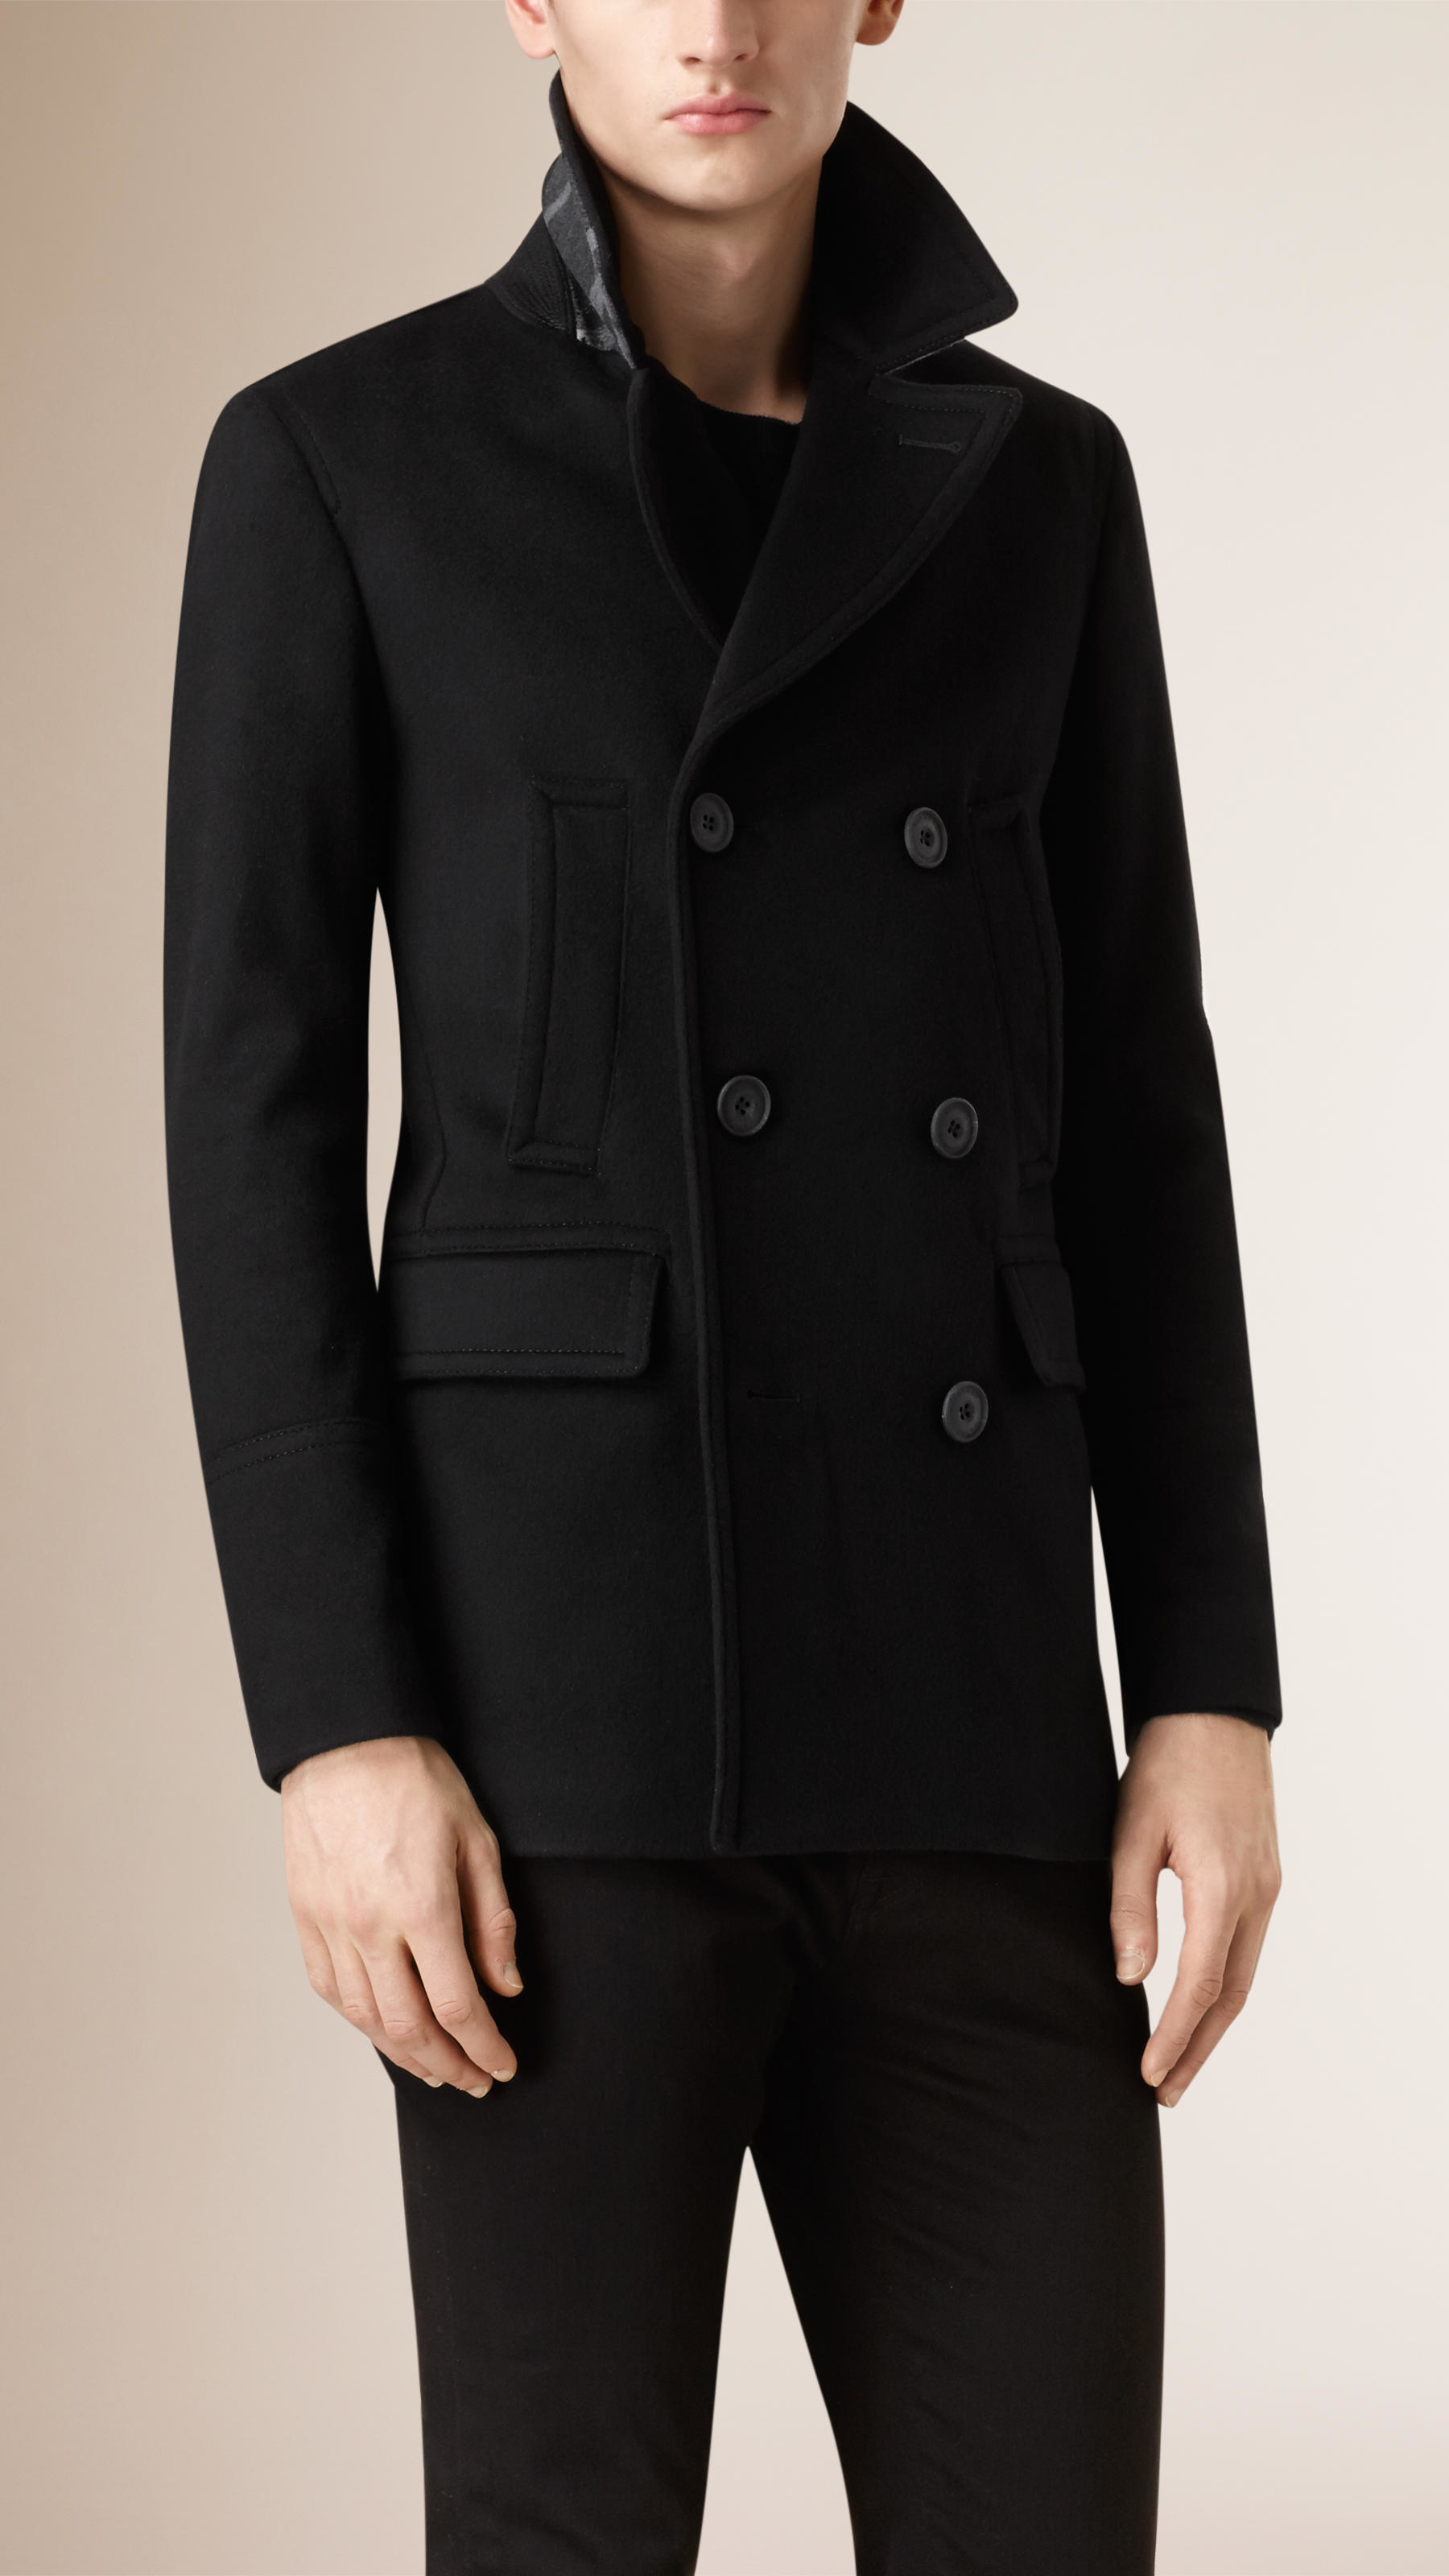 Lyst - Burberry Virgin Wool Cashmere Pea Coat in Black for Men